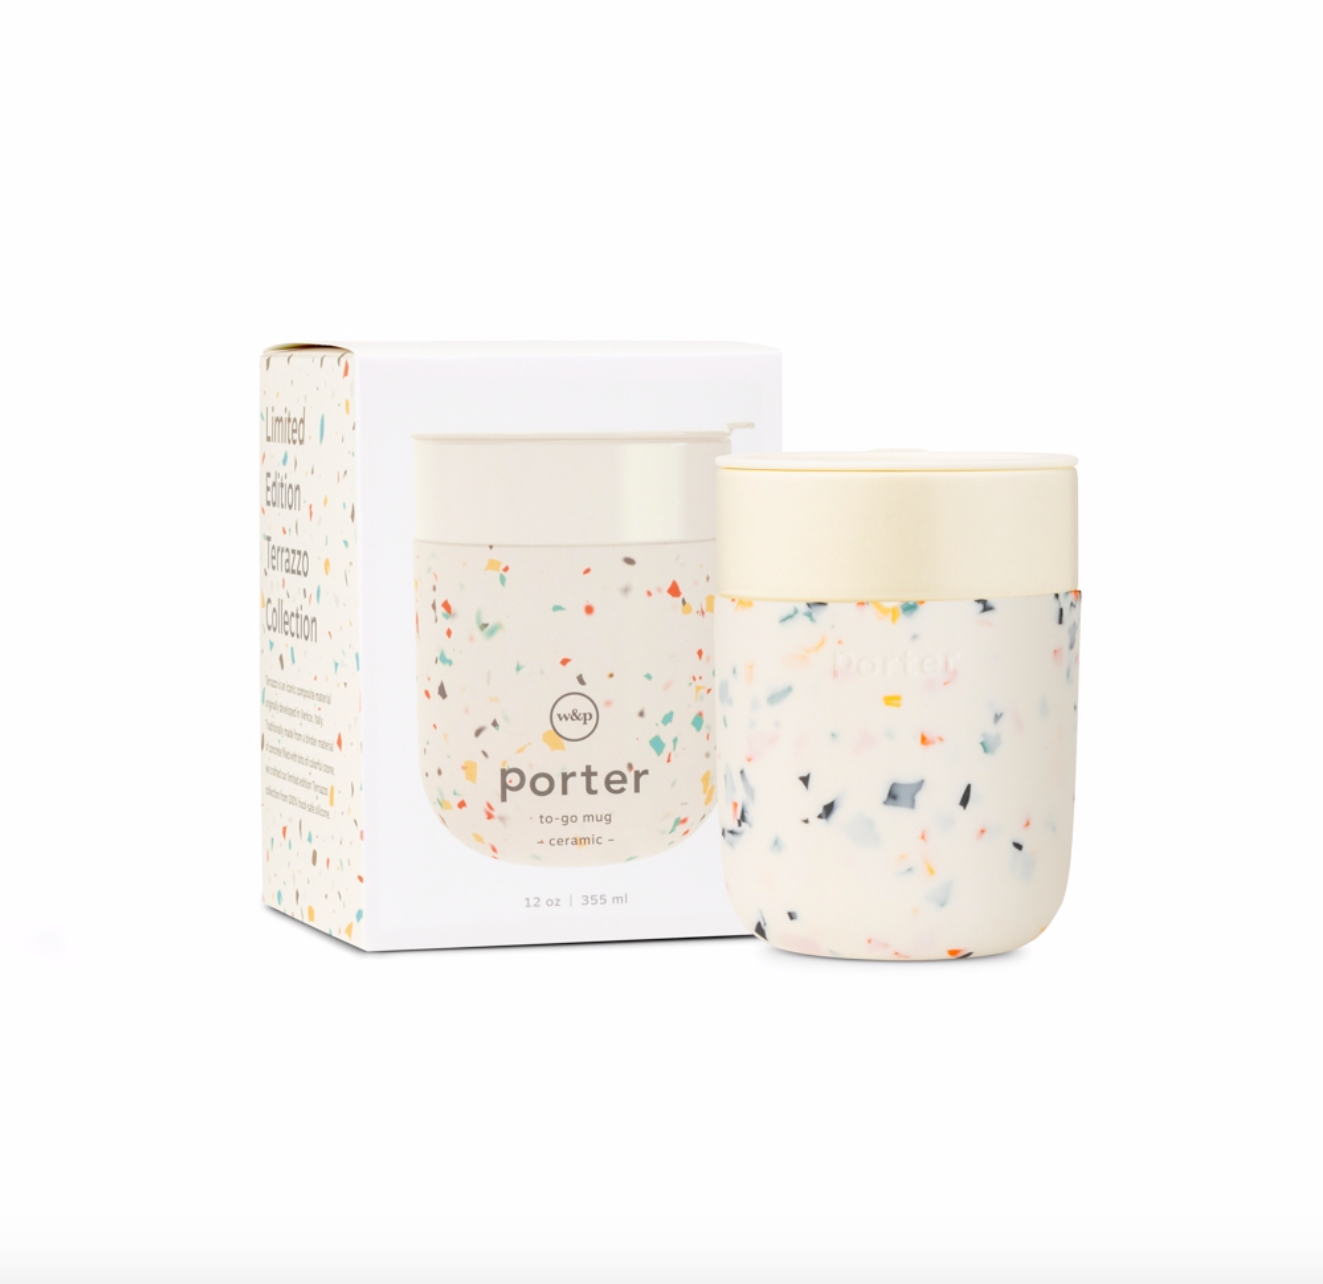 Porter To Go Cup - Cream & Charcoal Terrazzo